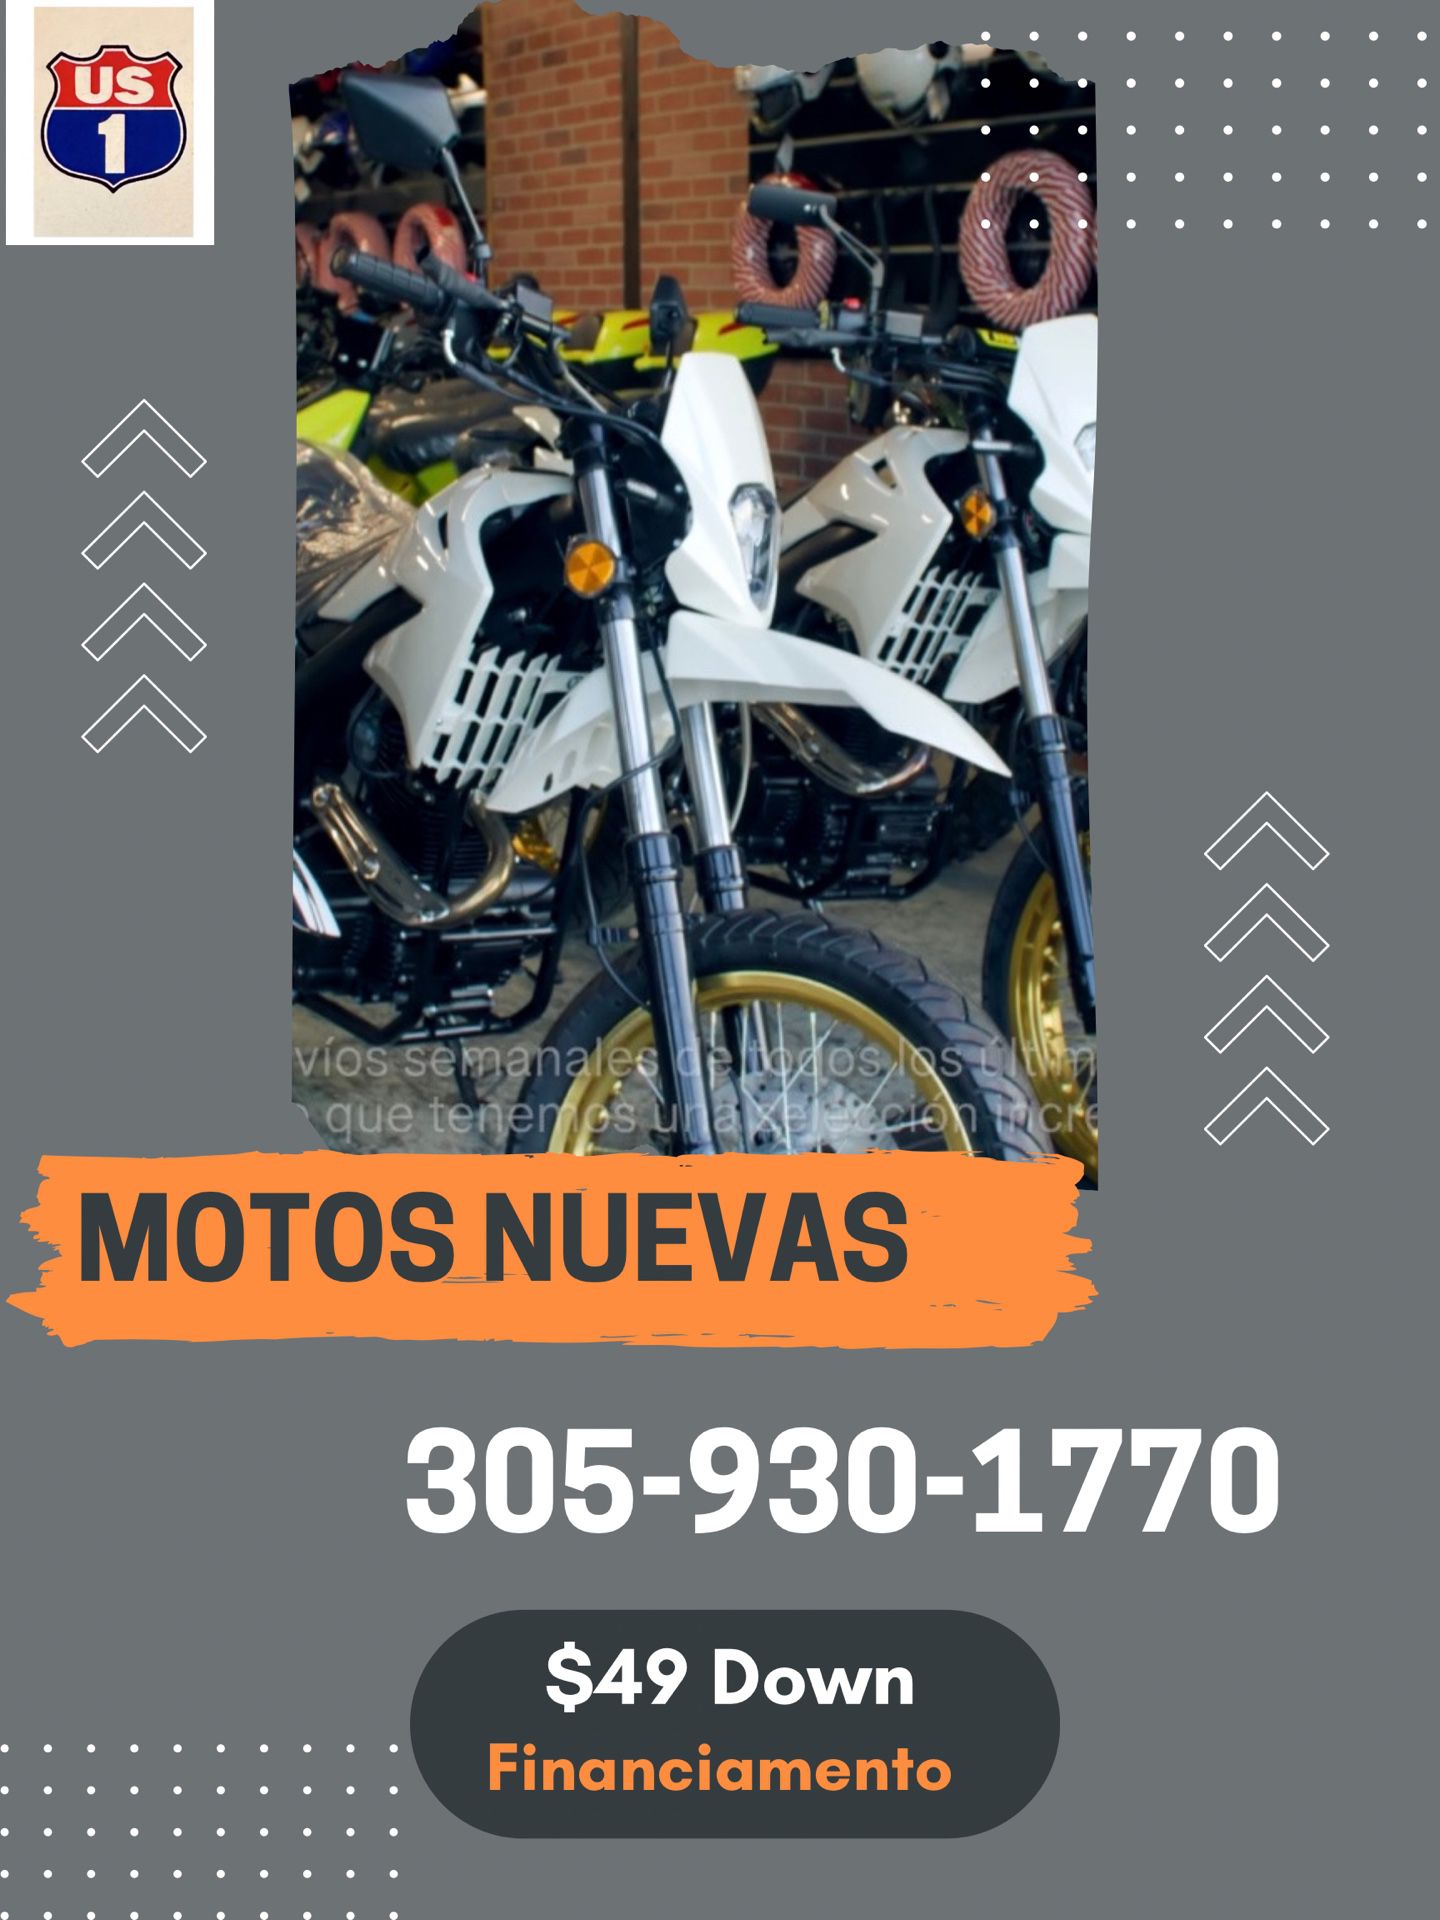 Motos Nuevas/New Scooters/Новые Скутеры